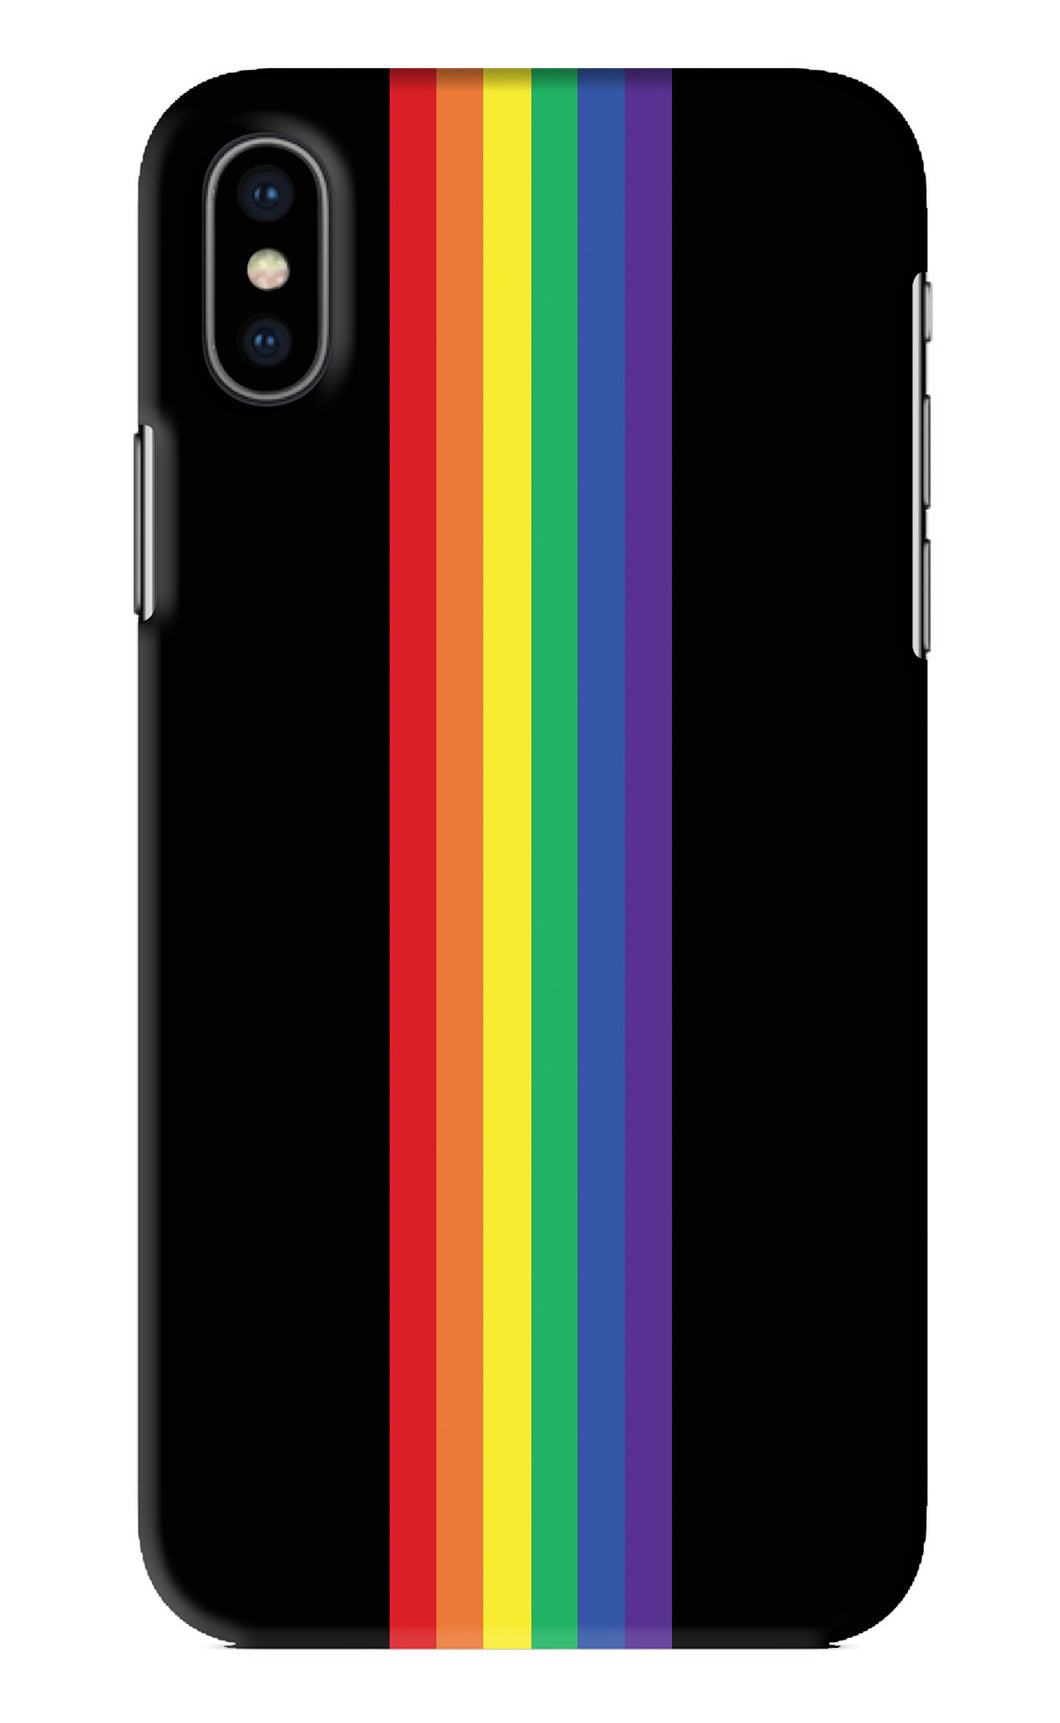 Pride iPhone X Back Skin Wrap